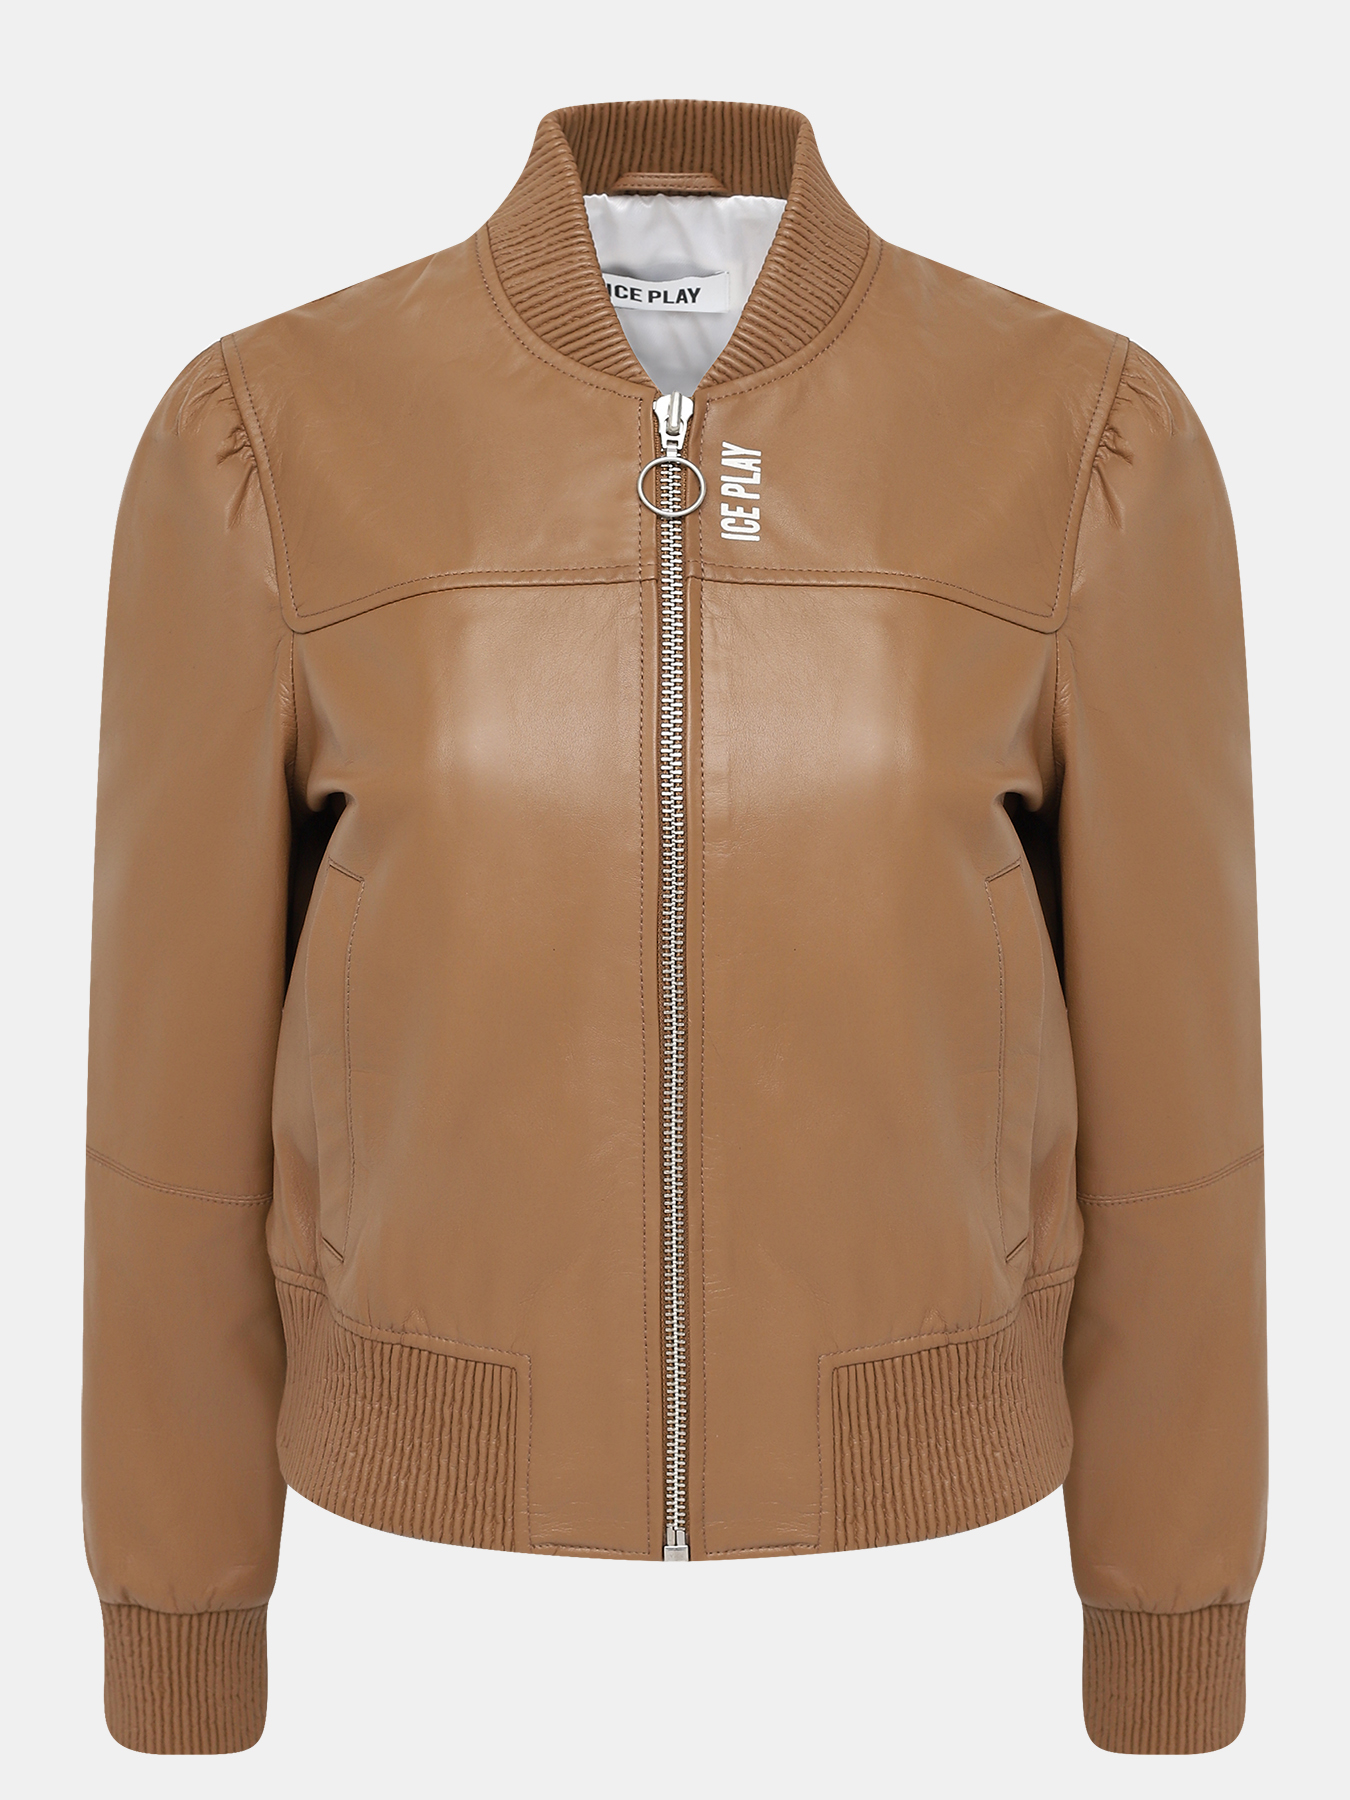 Кожаная куртка Ice Play 407191-021, цвет коричневый, размер 42